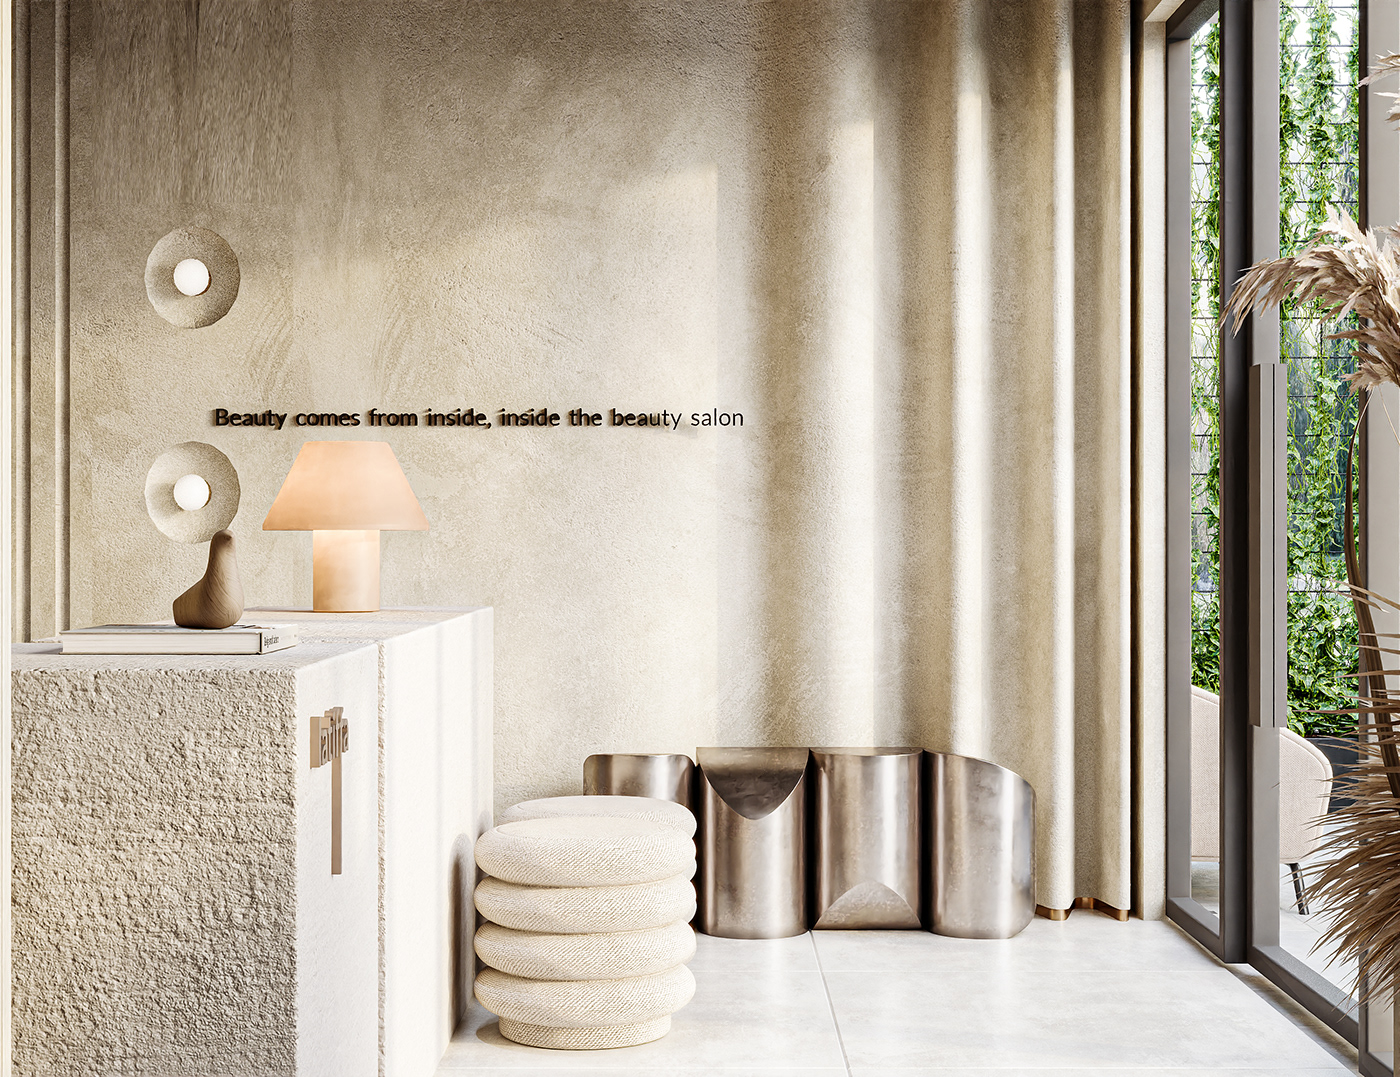 Interior salon design 3ds max visualization architecture corona modern 3D archviz Render